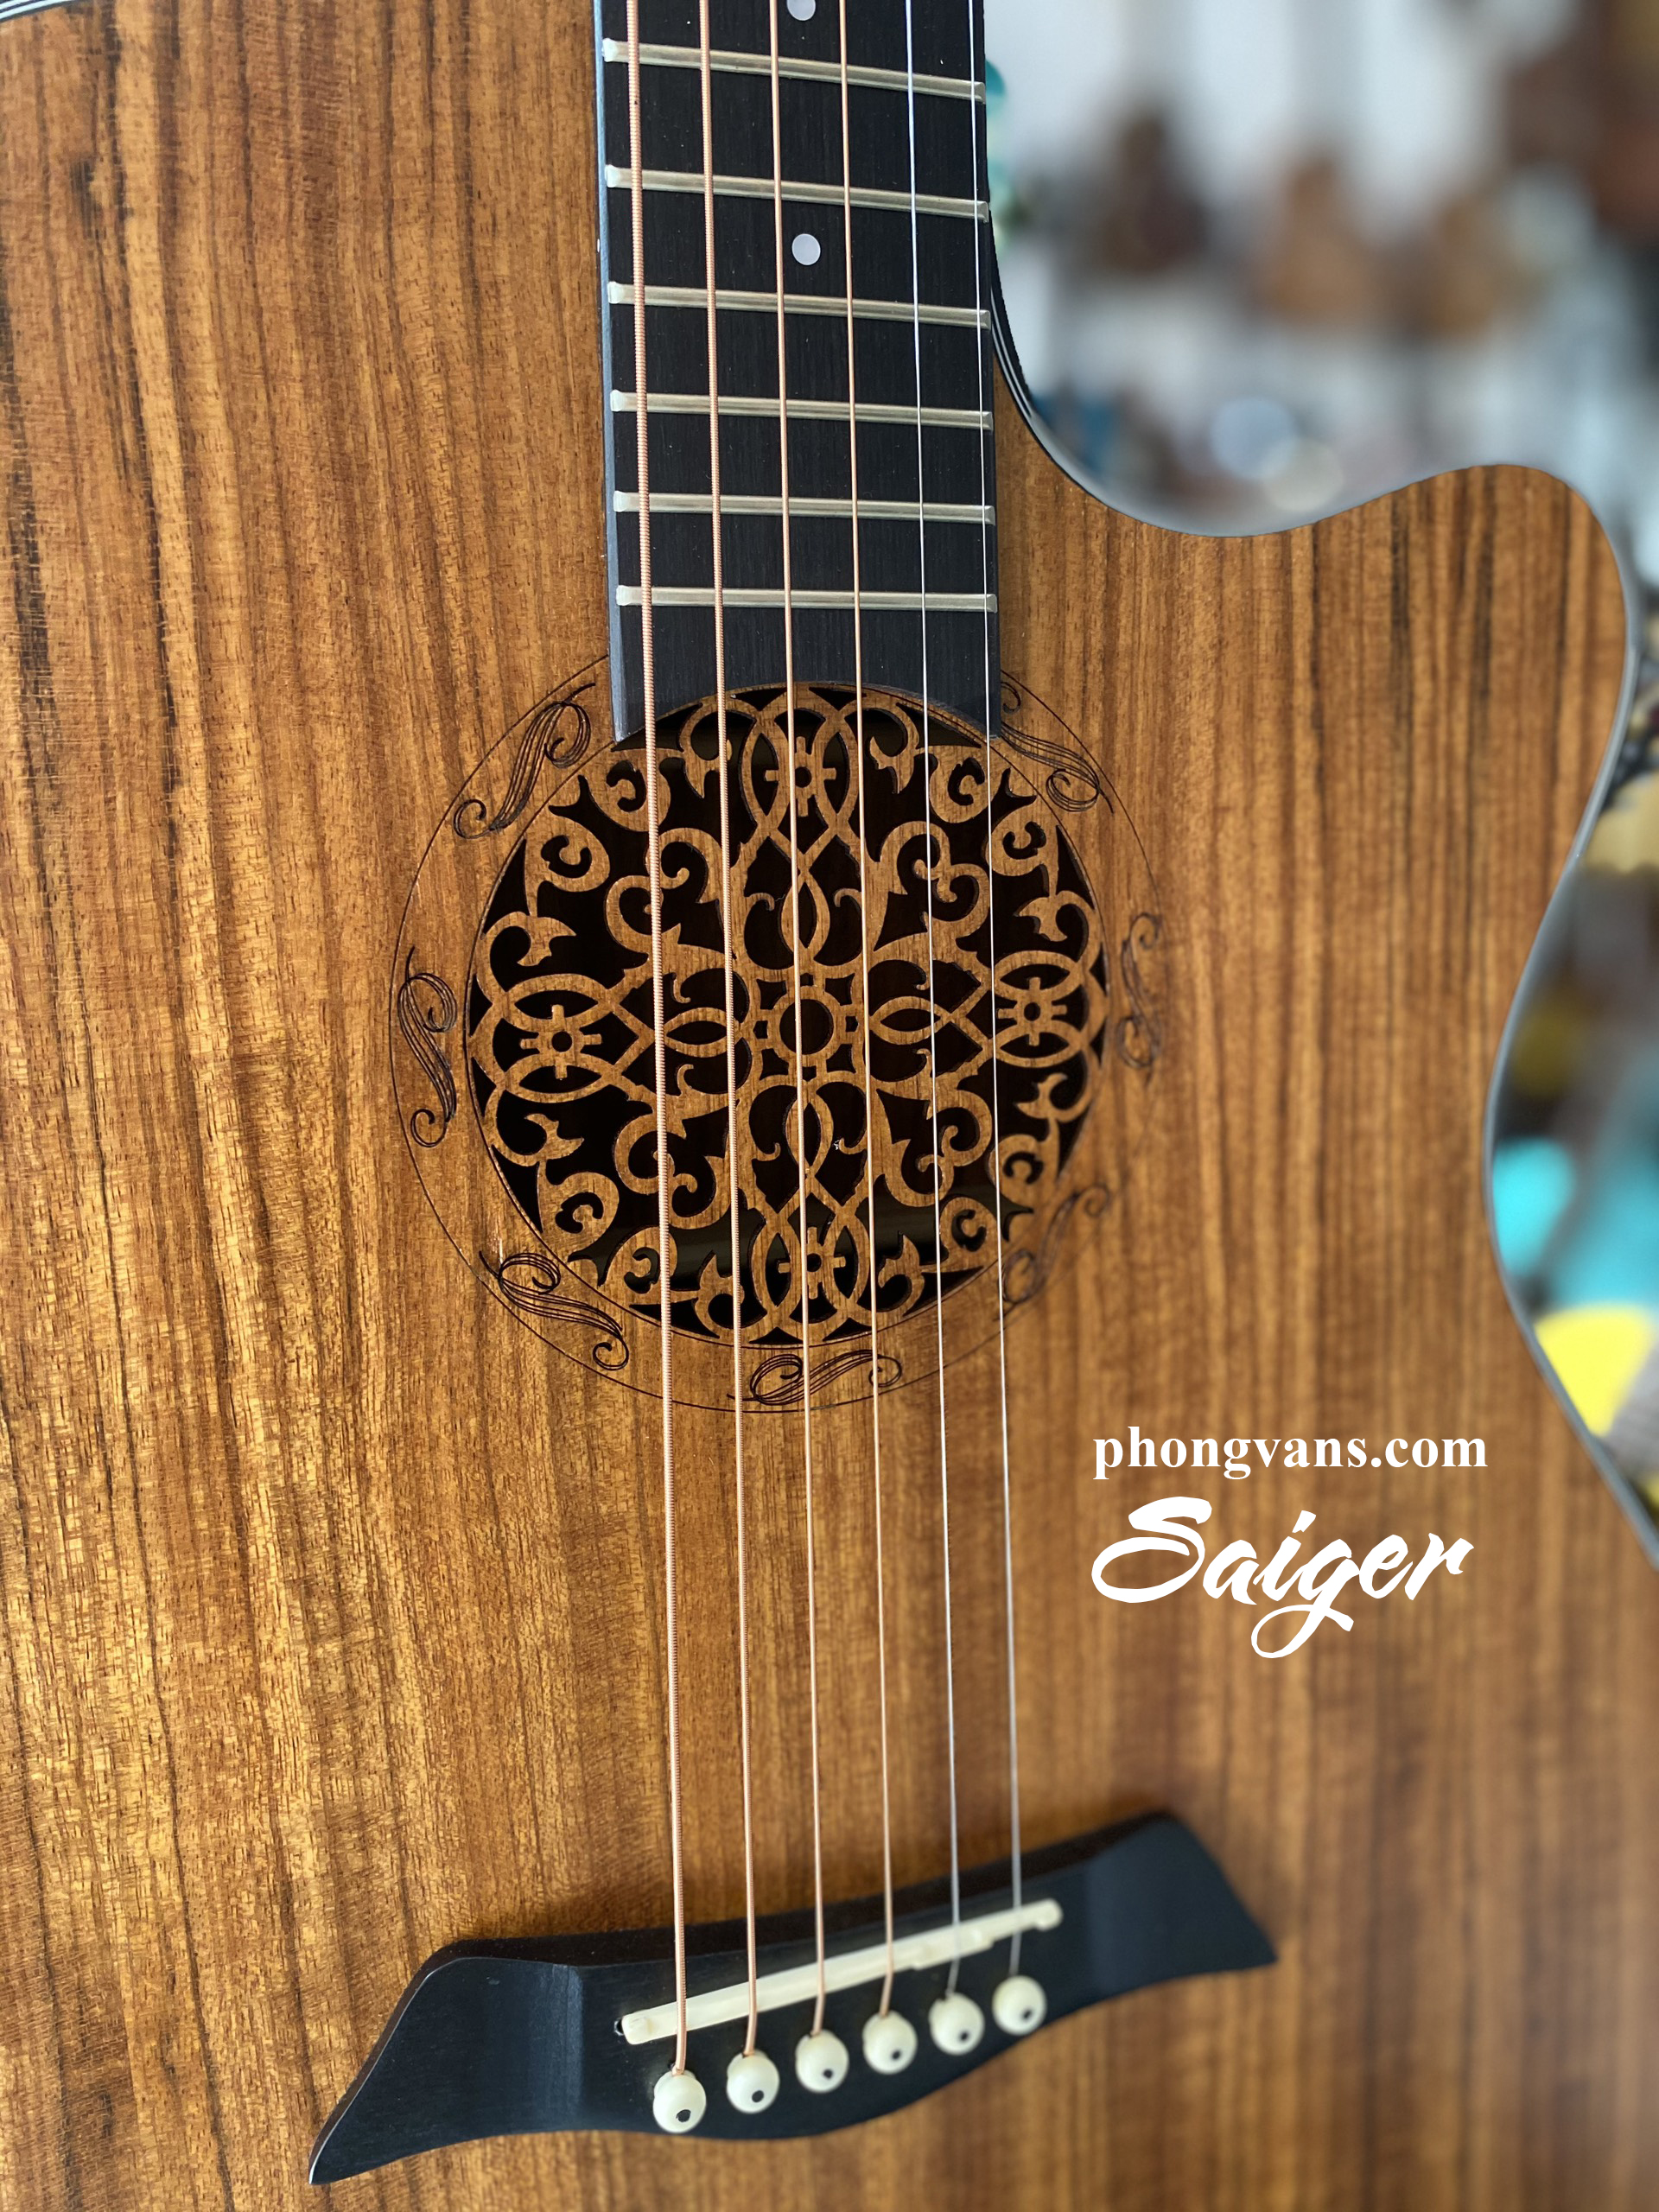 Đàn guitar Saiger gỗ walnut có EQ